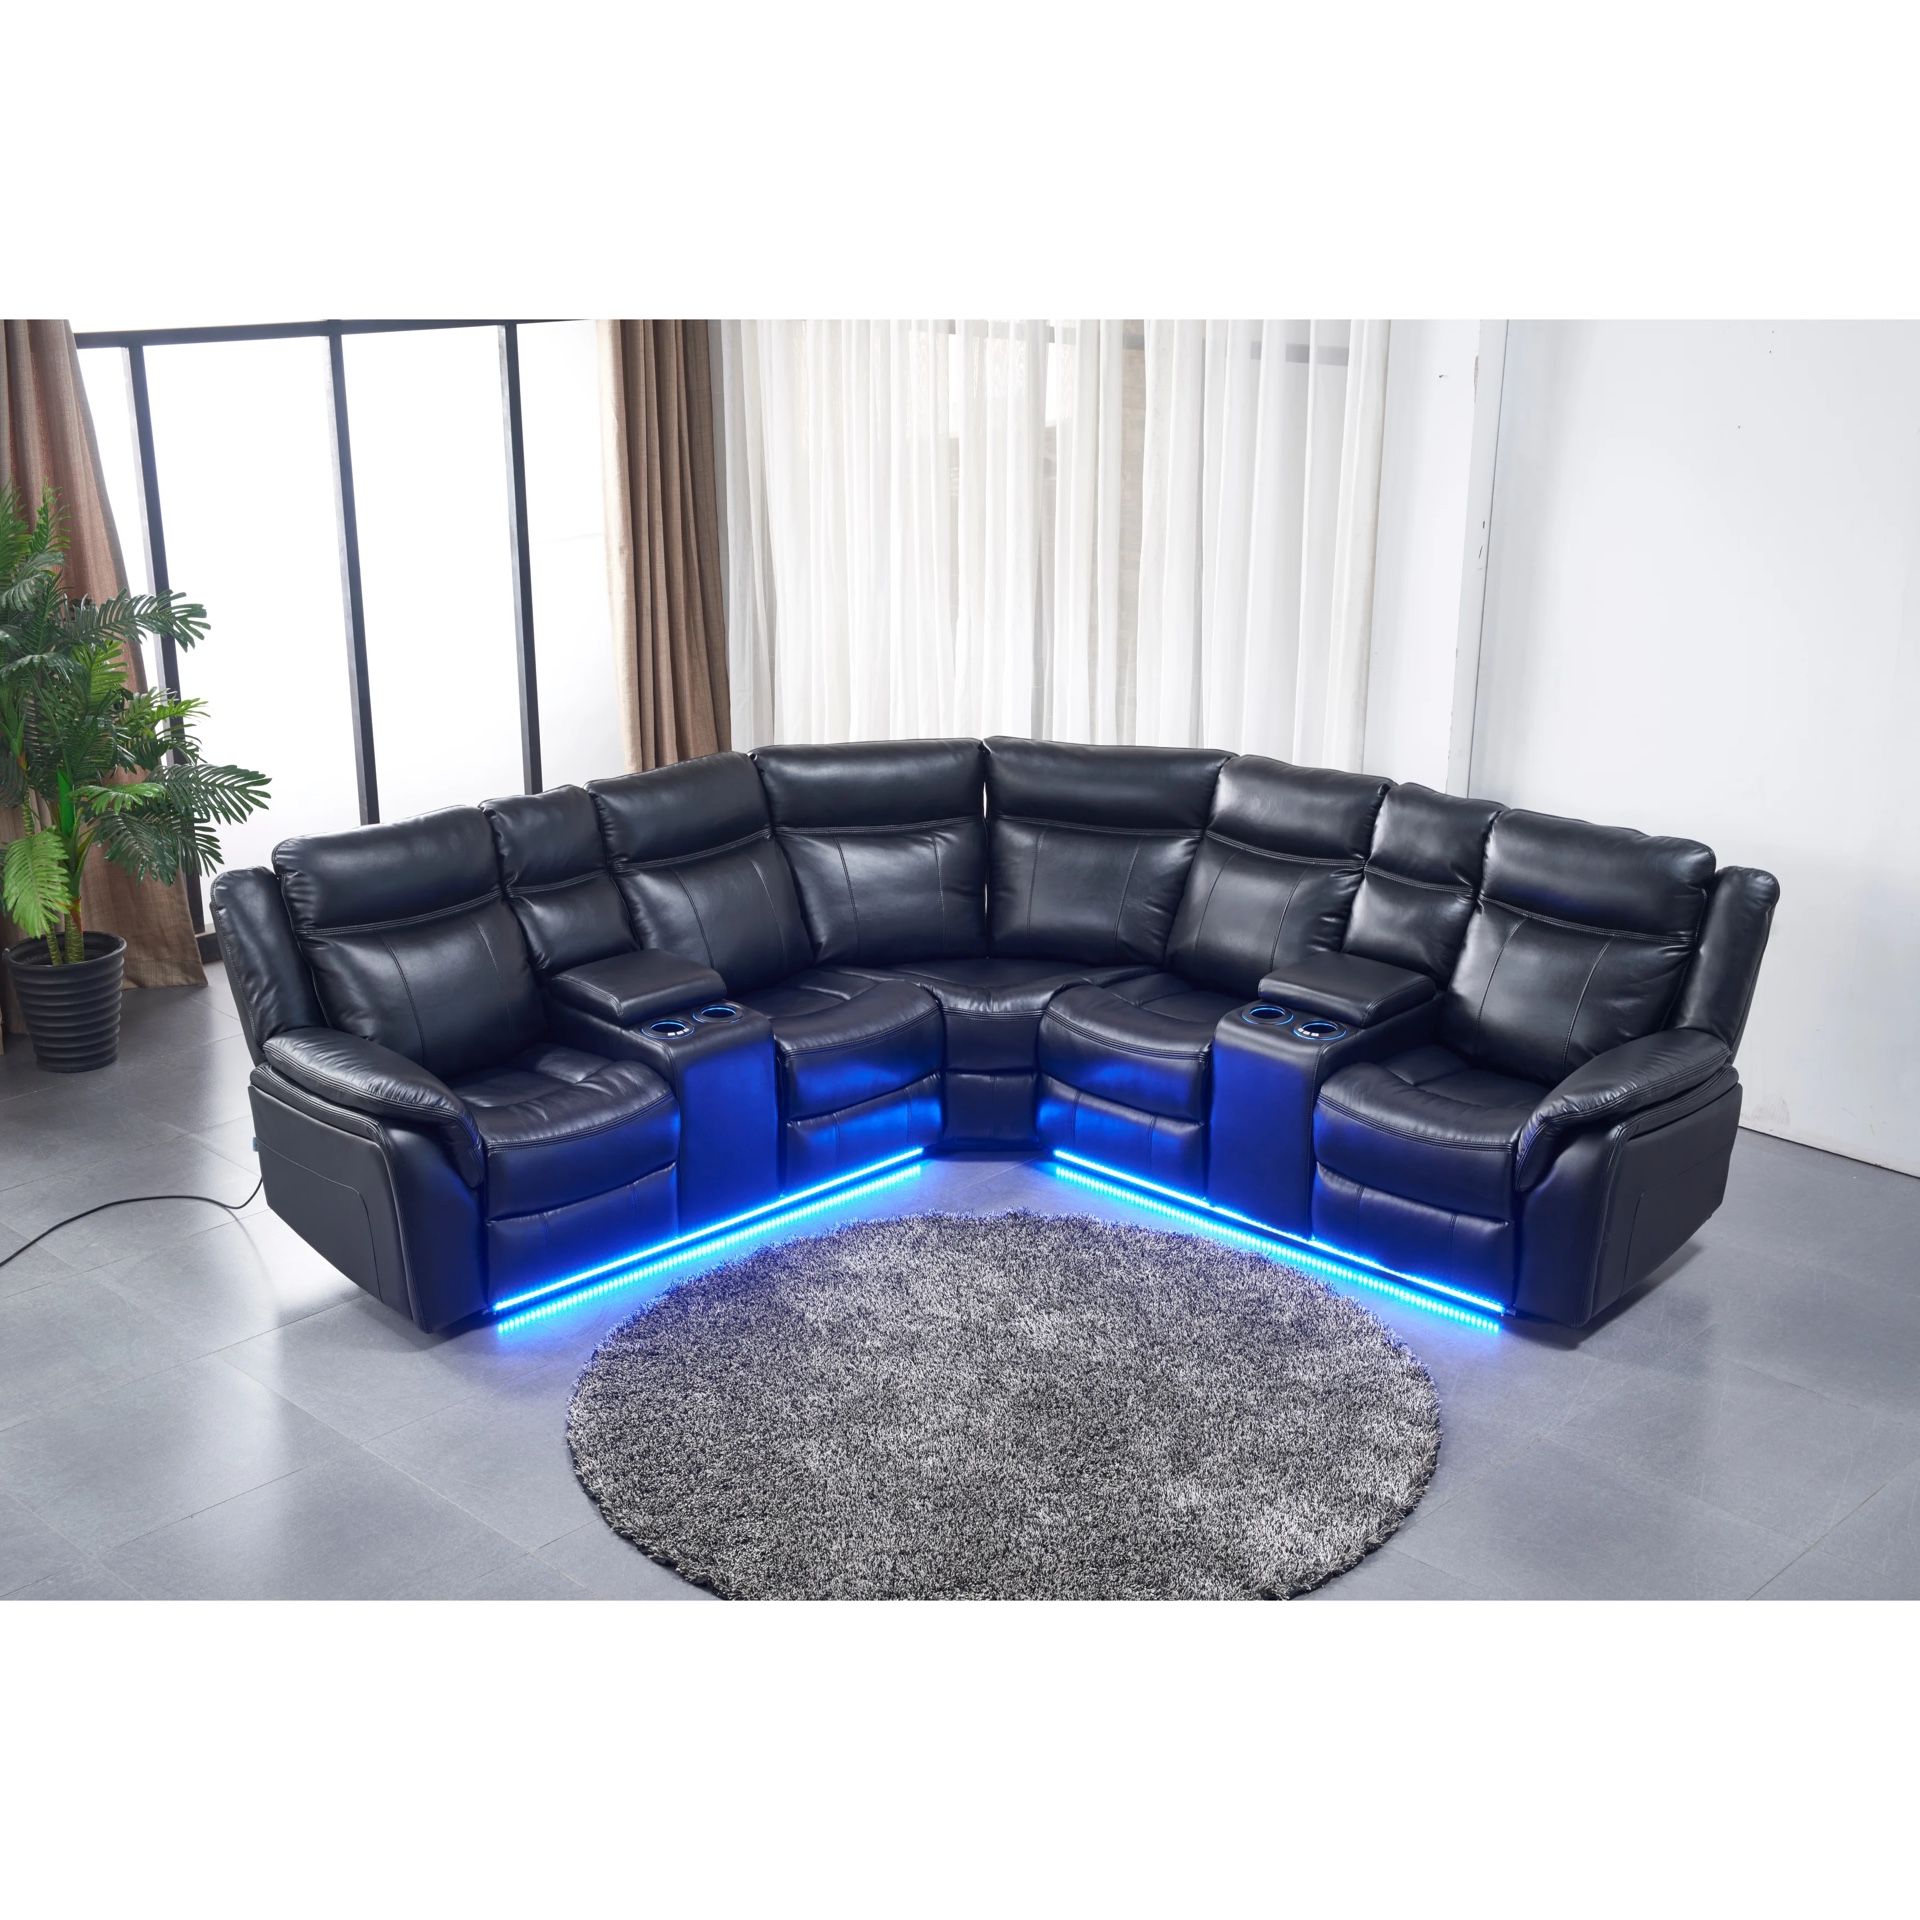 Black Sofa With Blue LED Lights